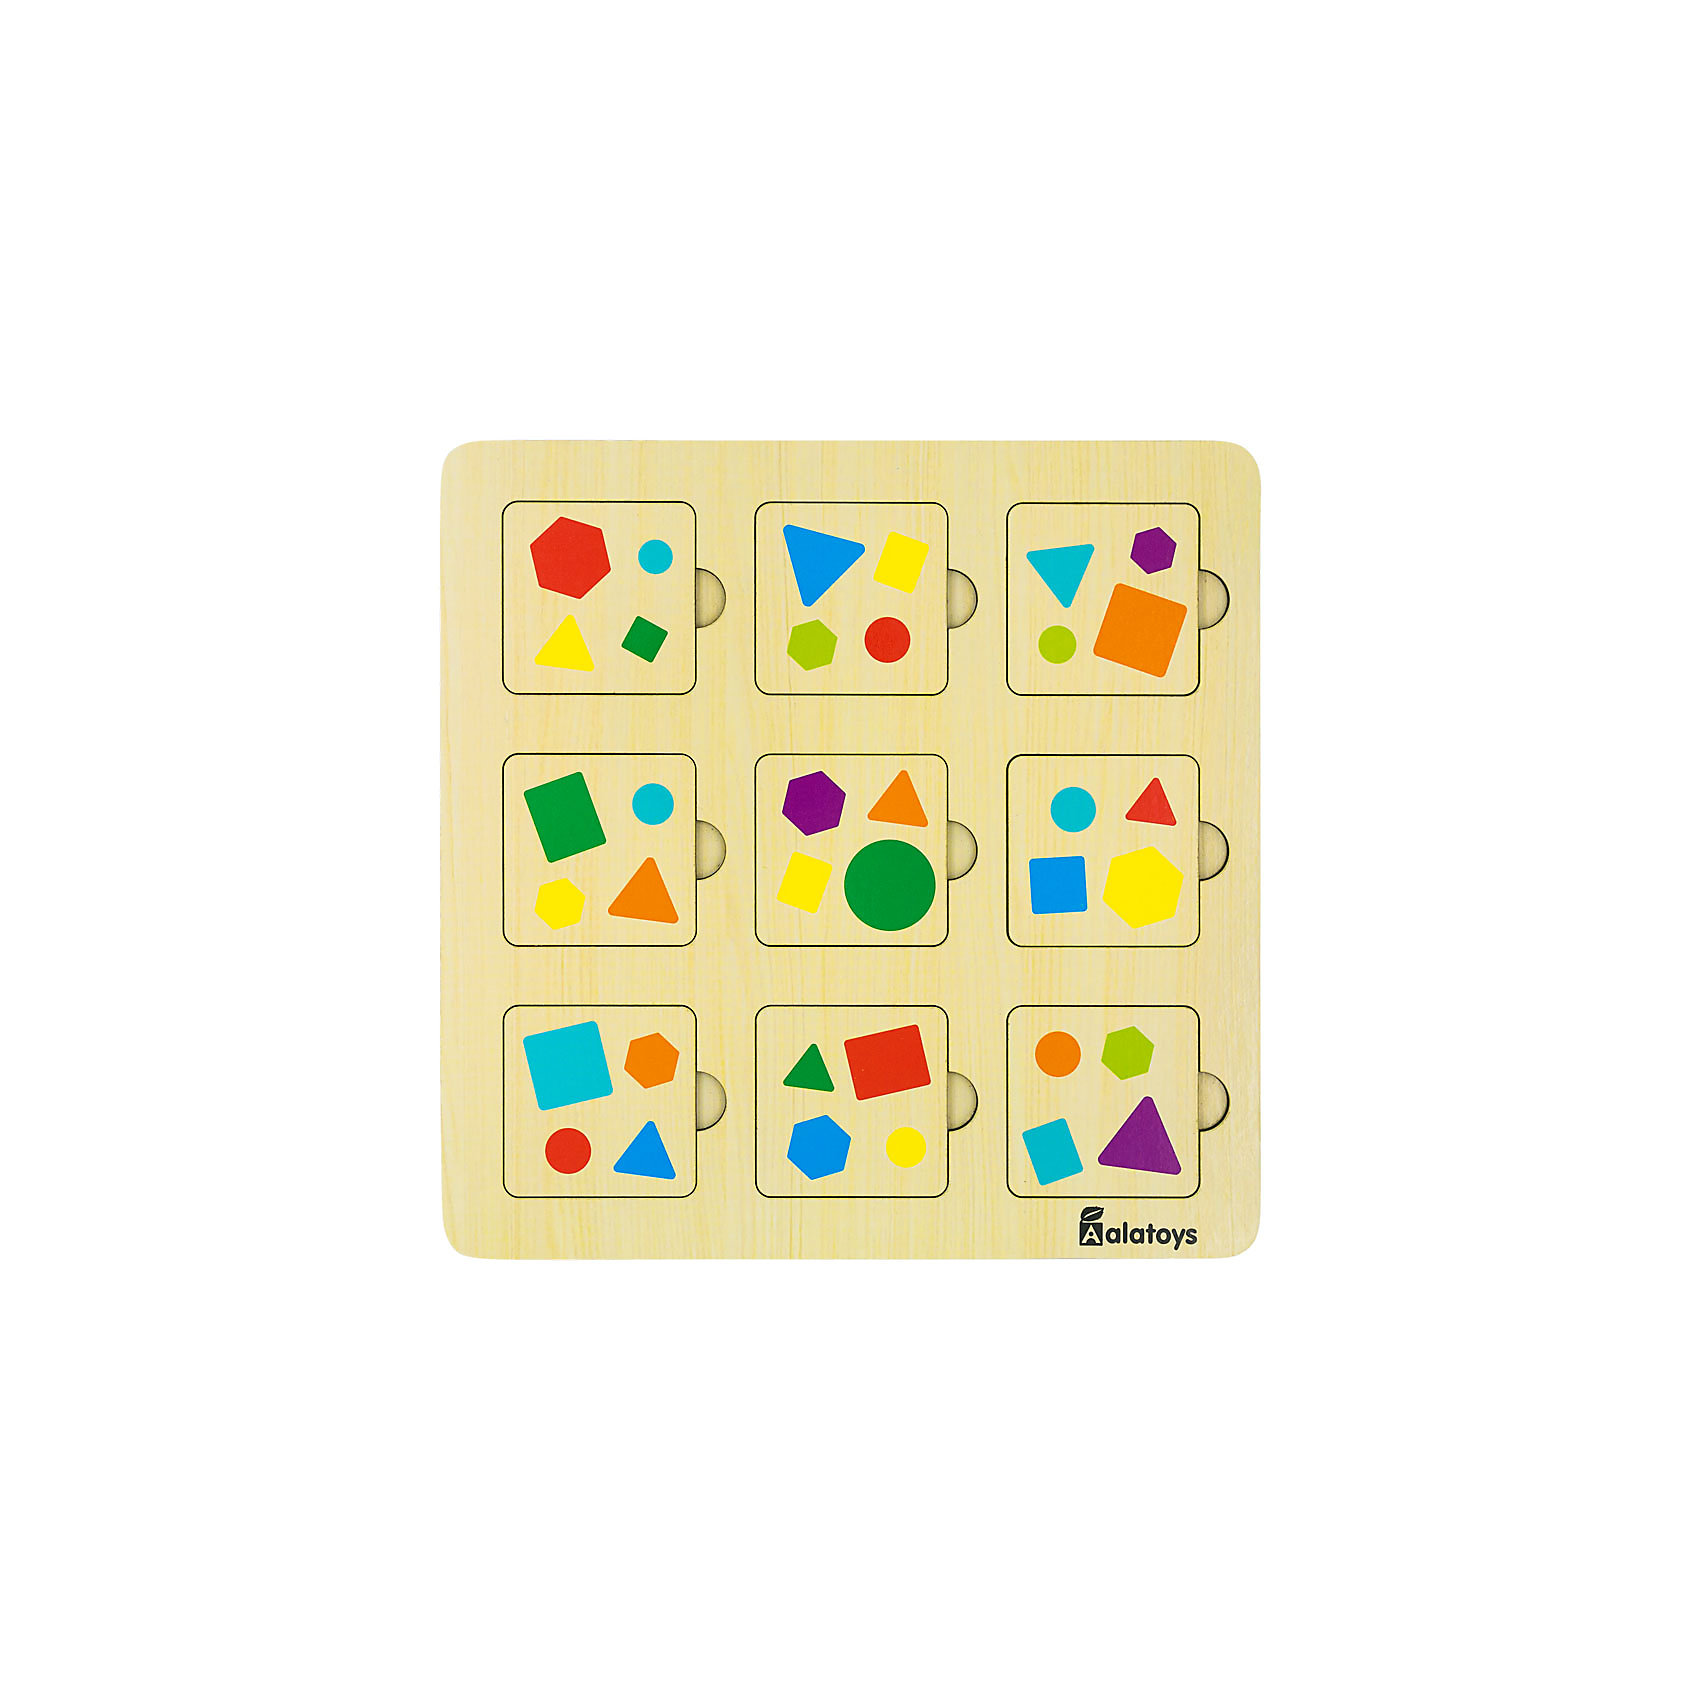 Мемори игра для детей Alatoys. Карточка 9. Размер карточек Мемори. Карточка из 9 квадратиков. Мемори цена